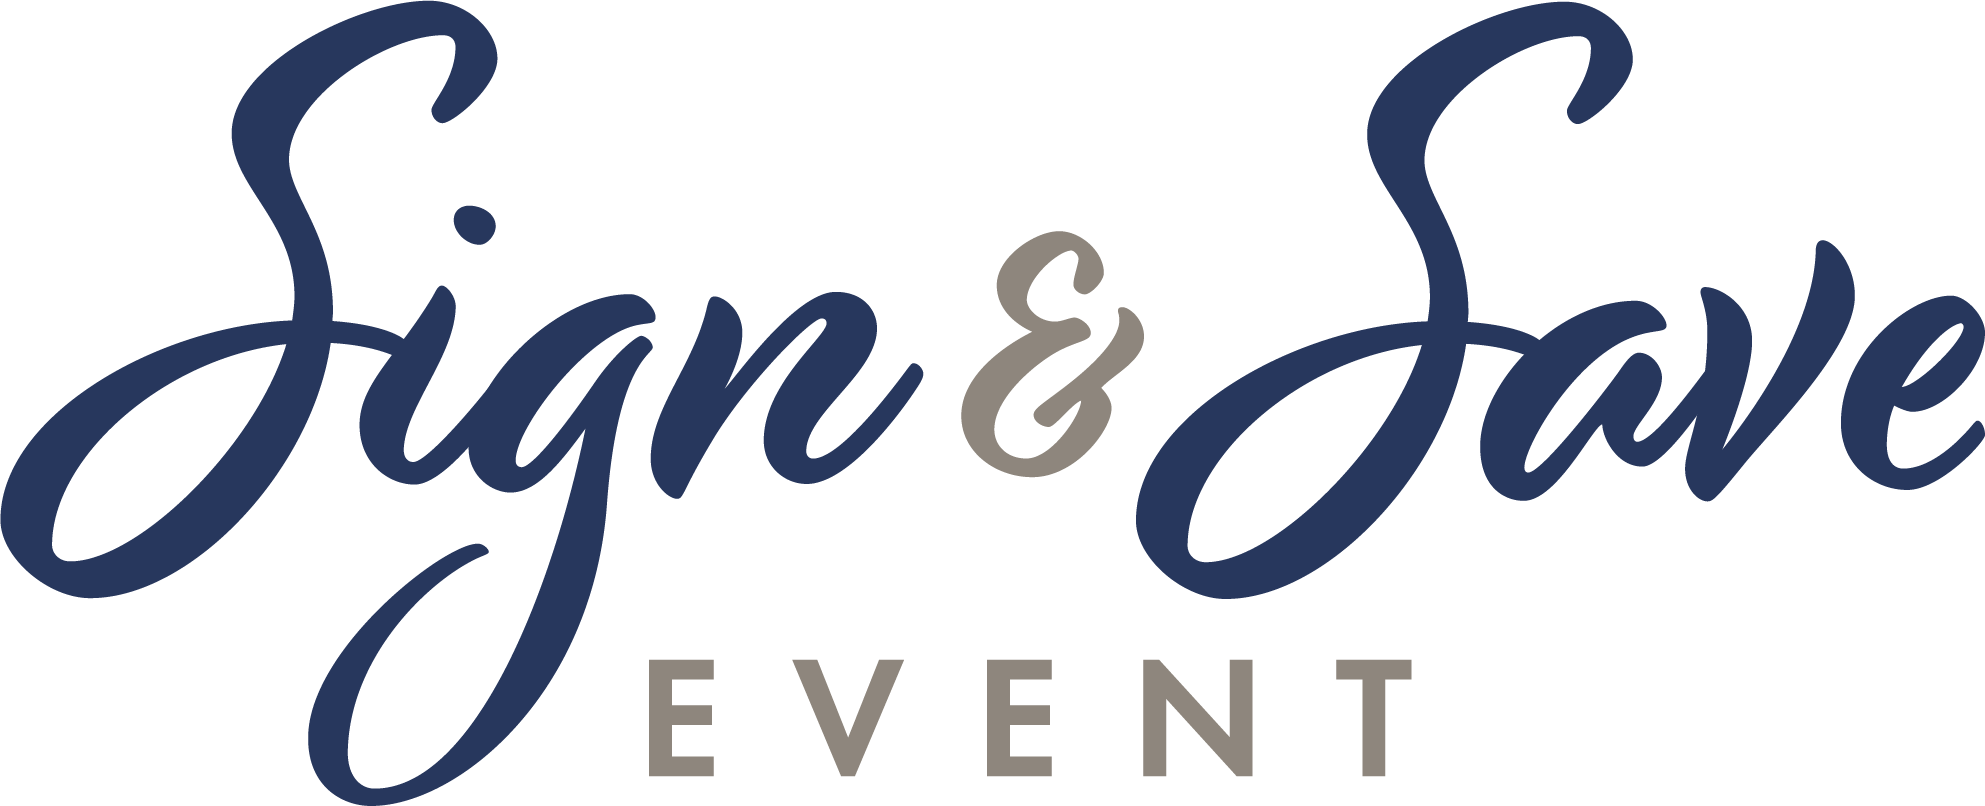 Sign & Save Event logo